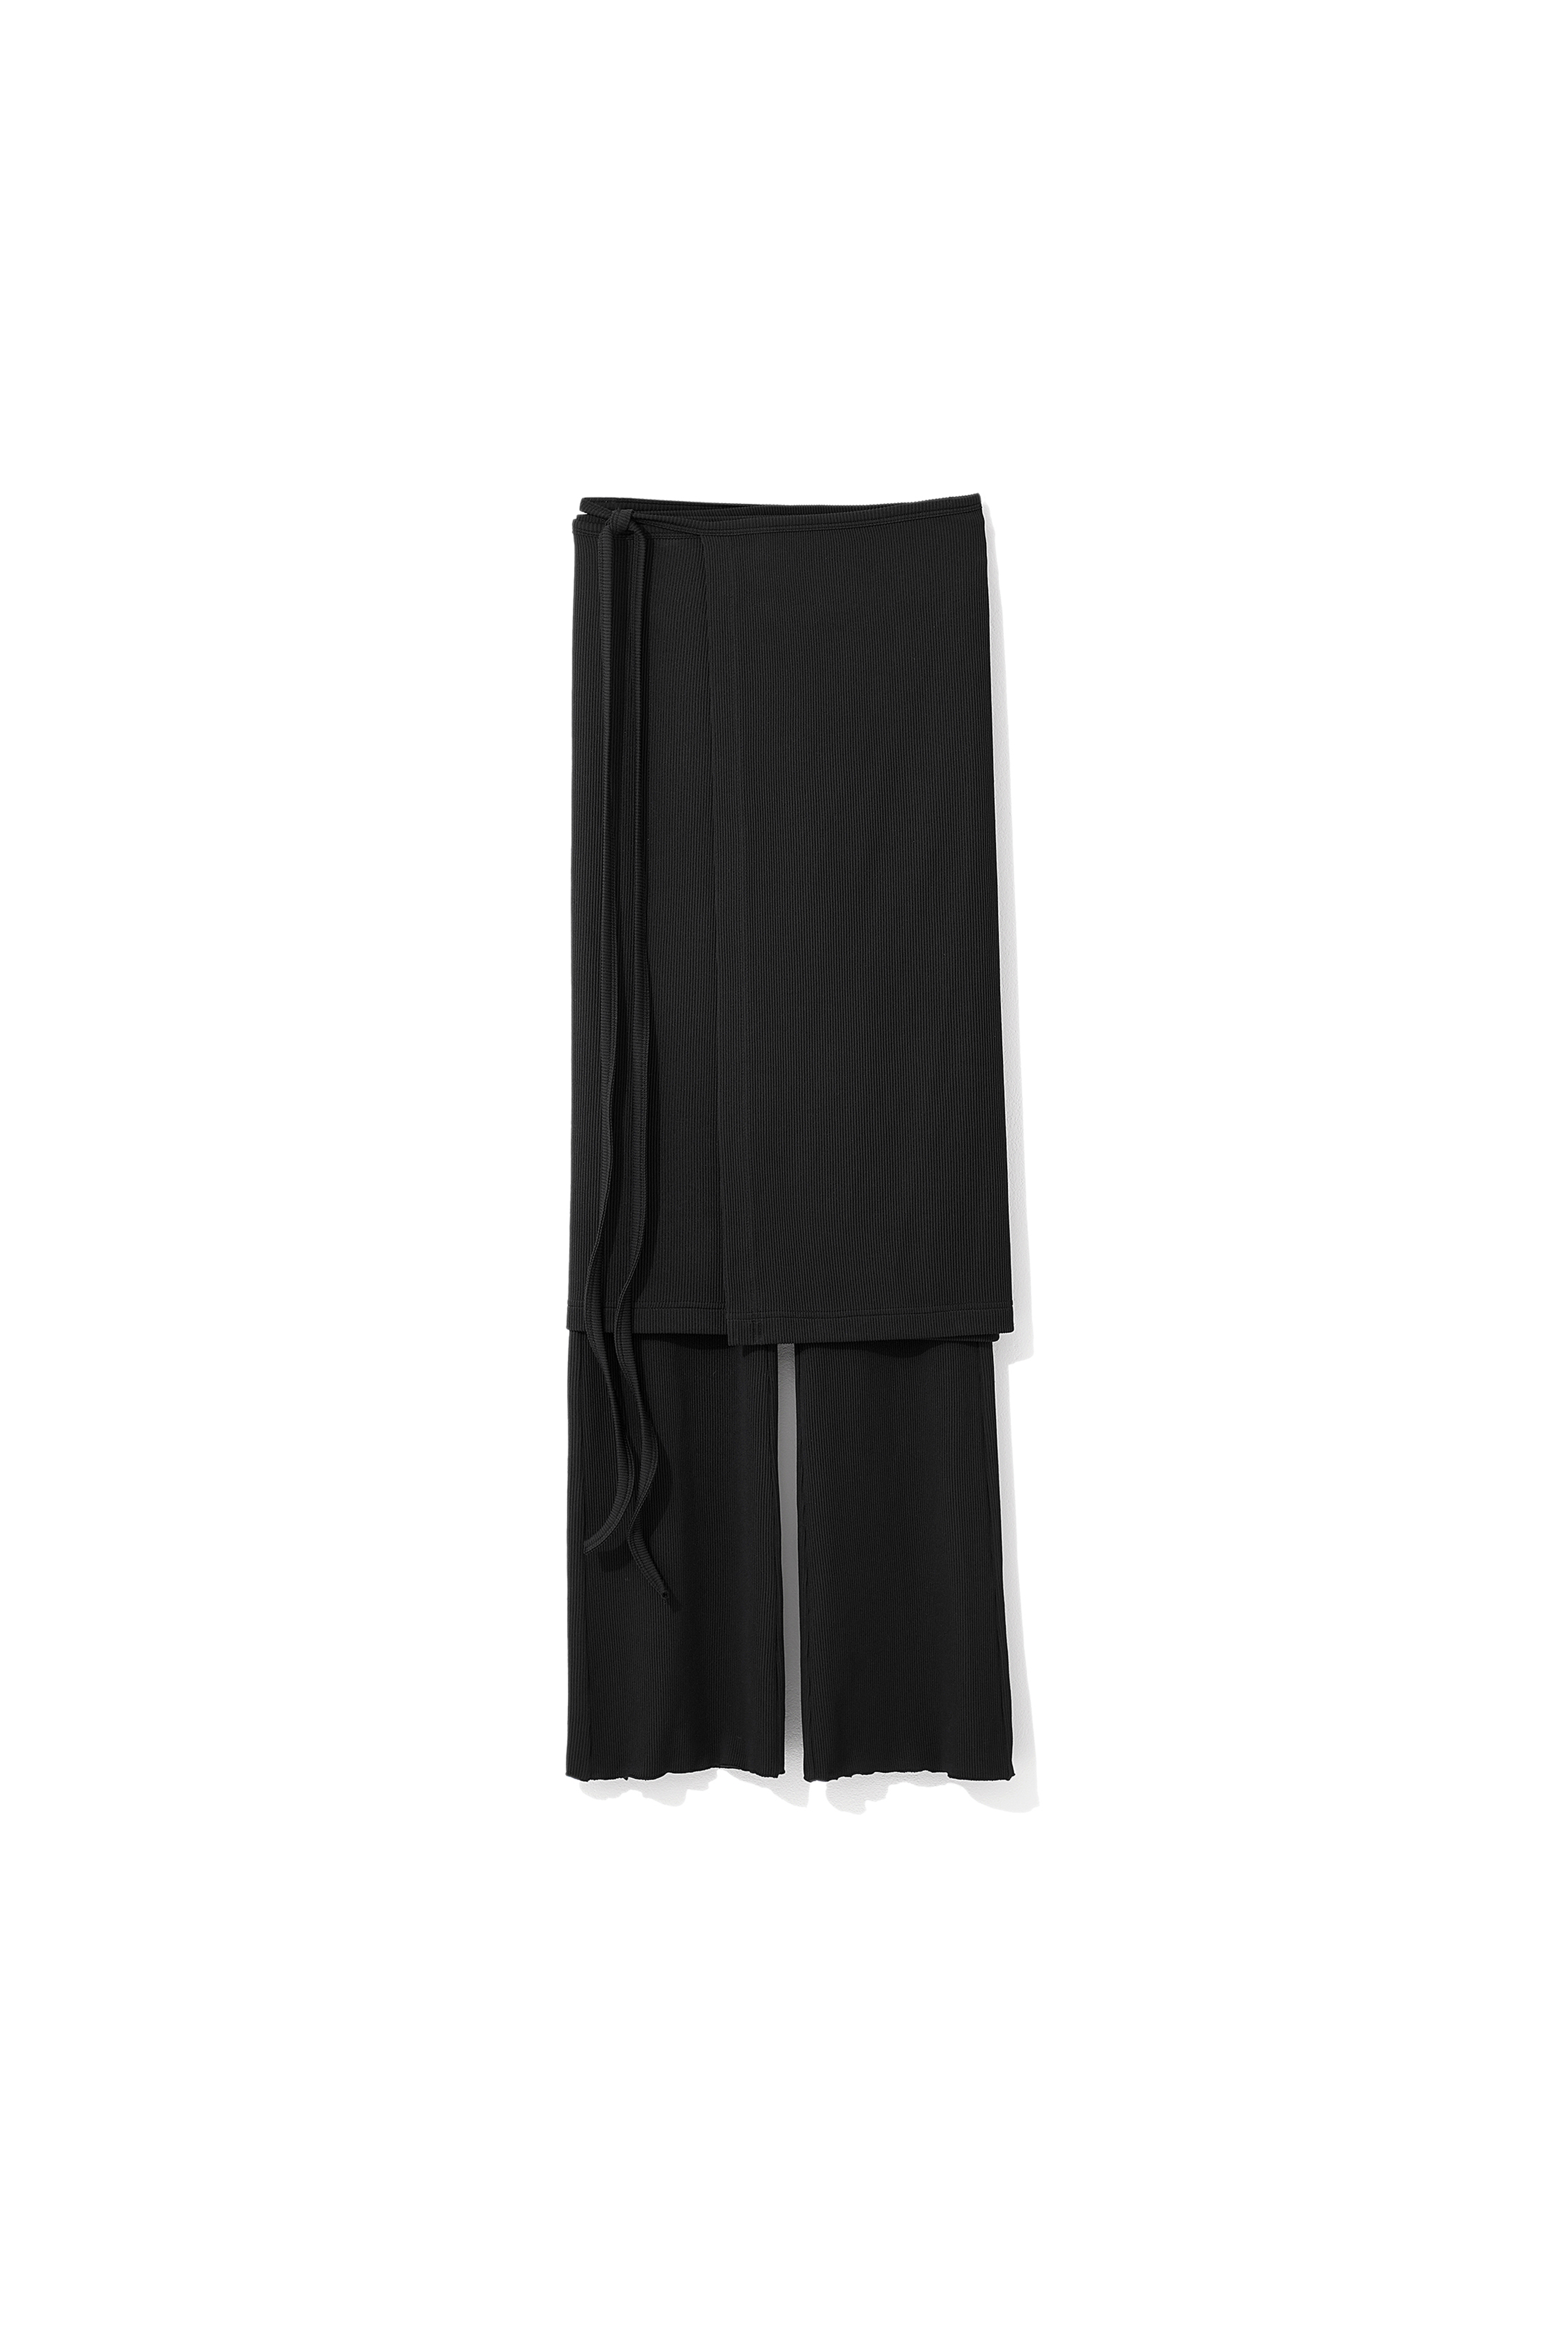 2nd) Lulu Wrap Pants Black [25% OFF, 09.18(MON) - 09.22(FRI)]